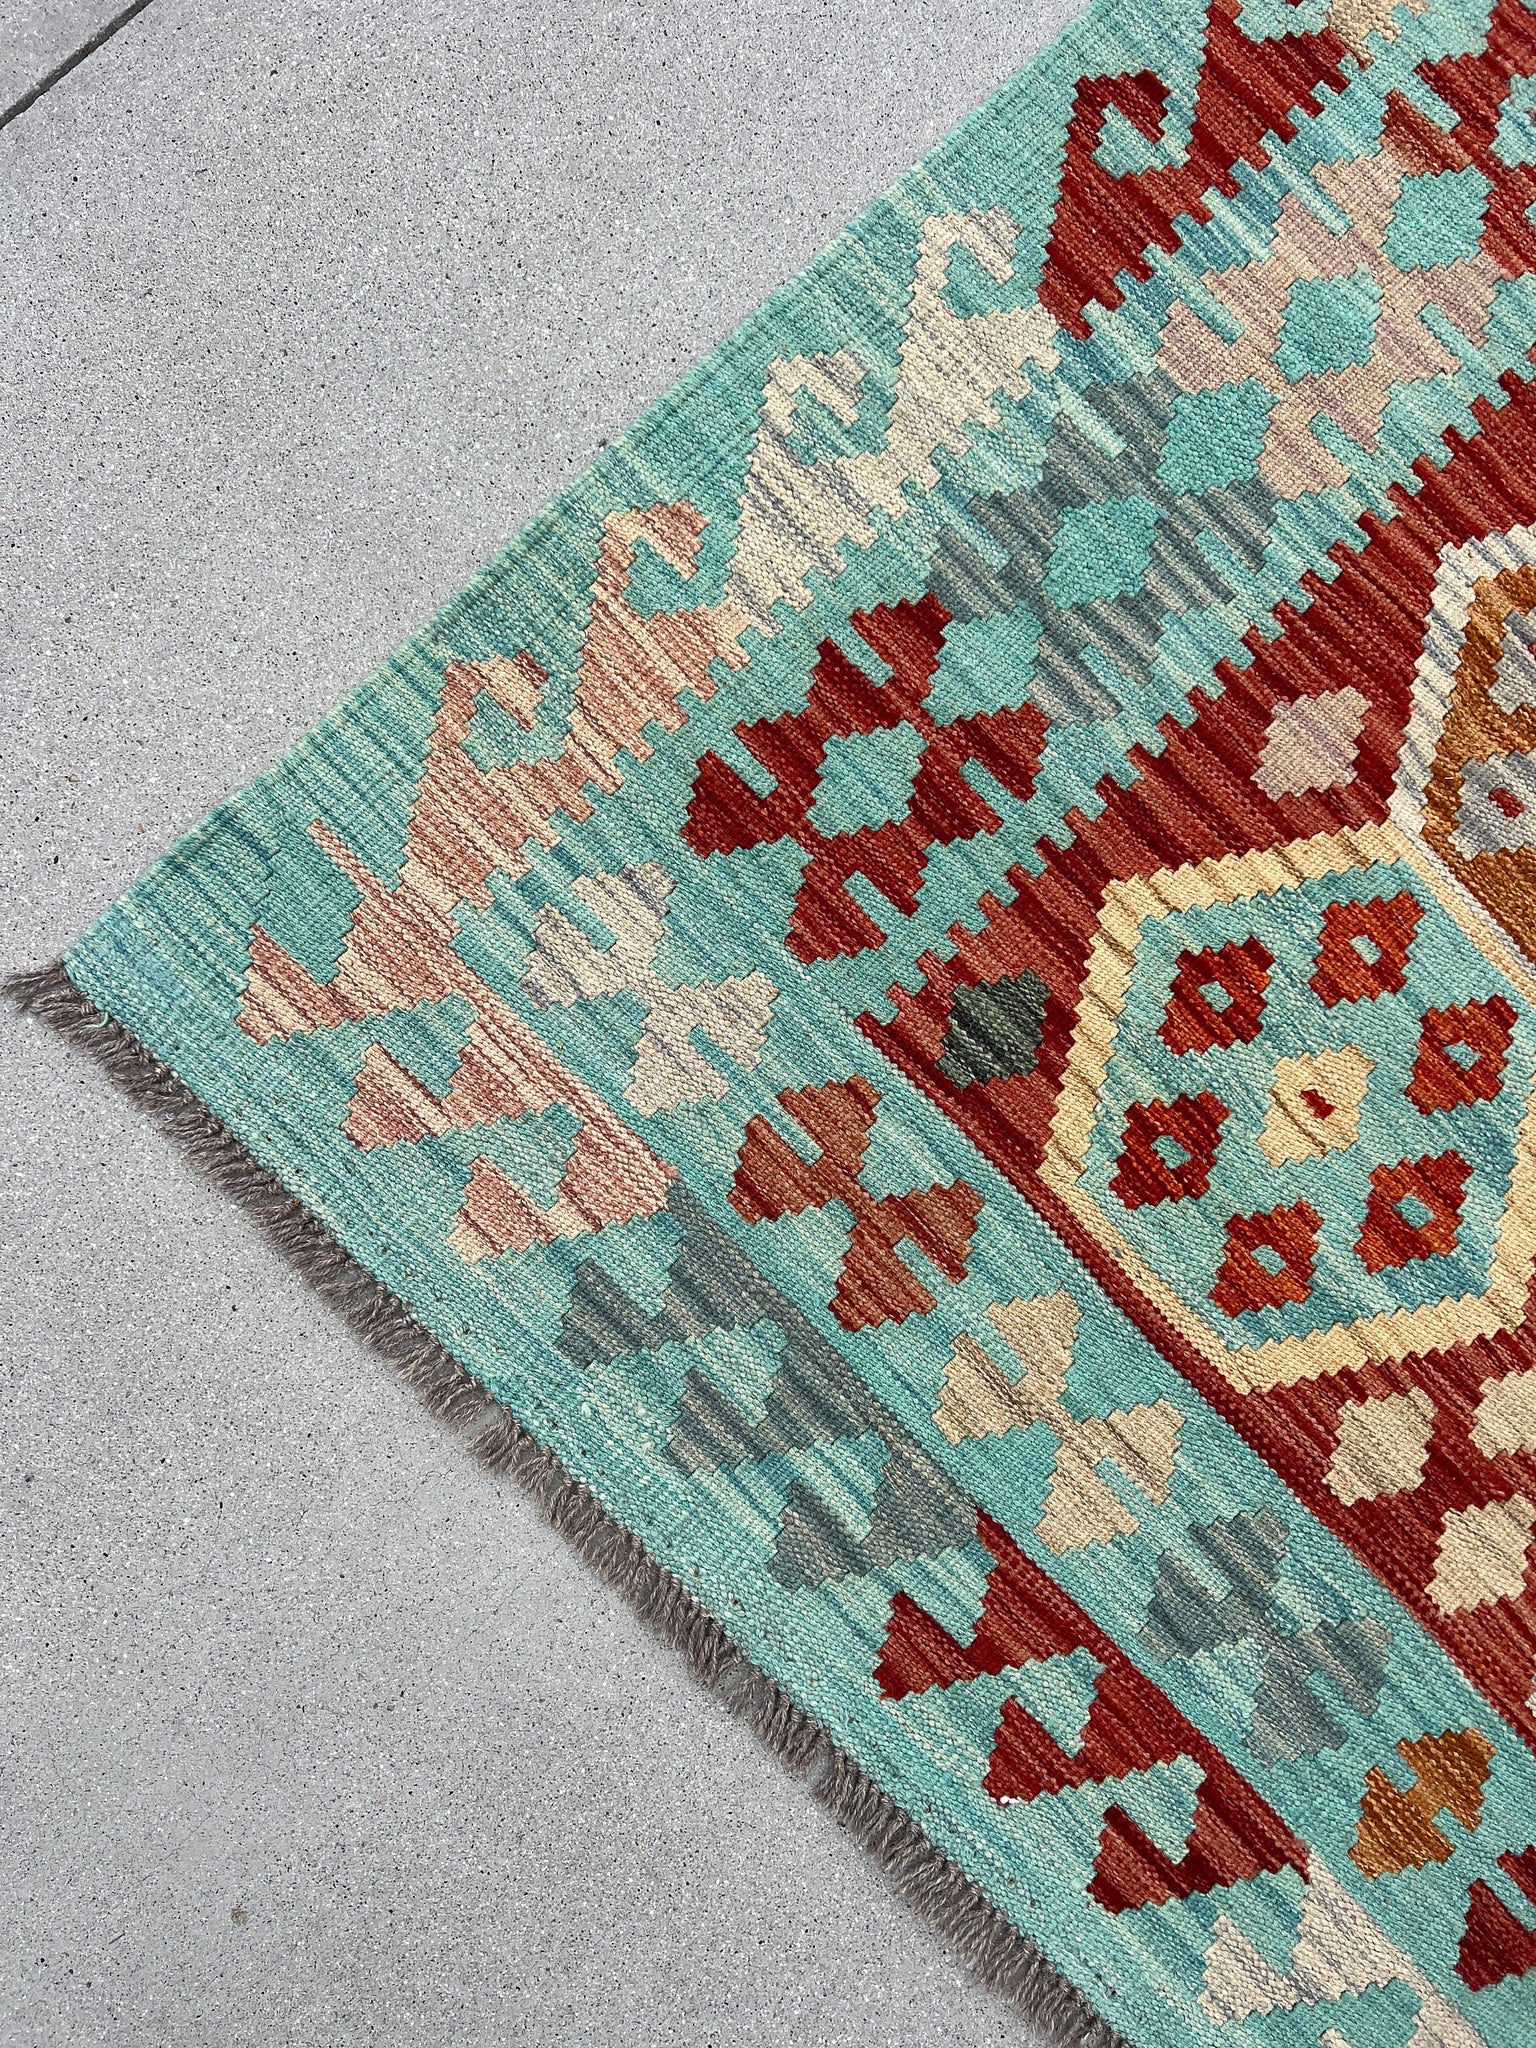 6x8 (180x245) Handmade Afghan Kilim Rug | Turquoise Brick Red Burnt Orange Grey Chocolate Tan Brown Cornsilk Teal Charcoal | Flatweave Wool